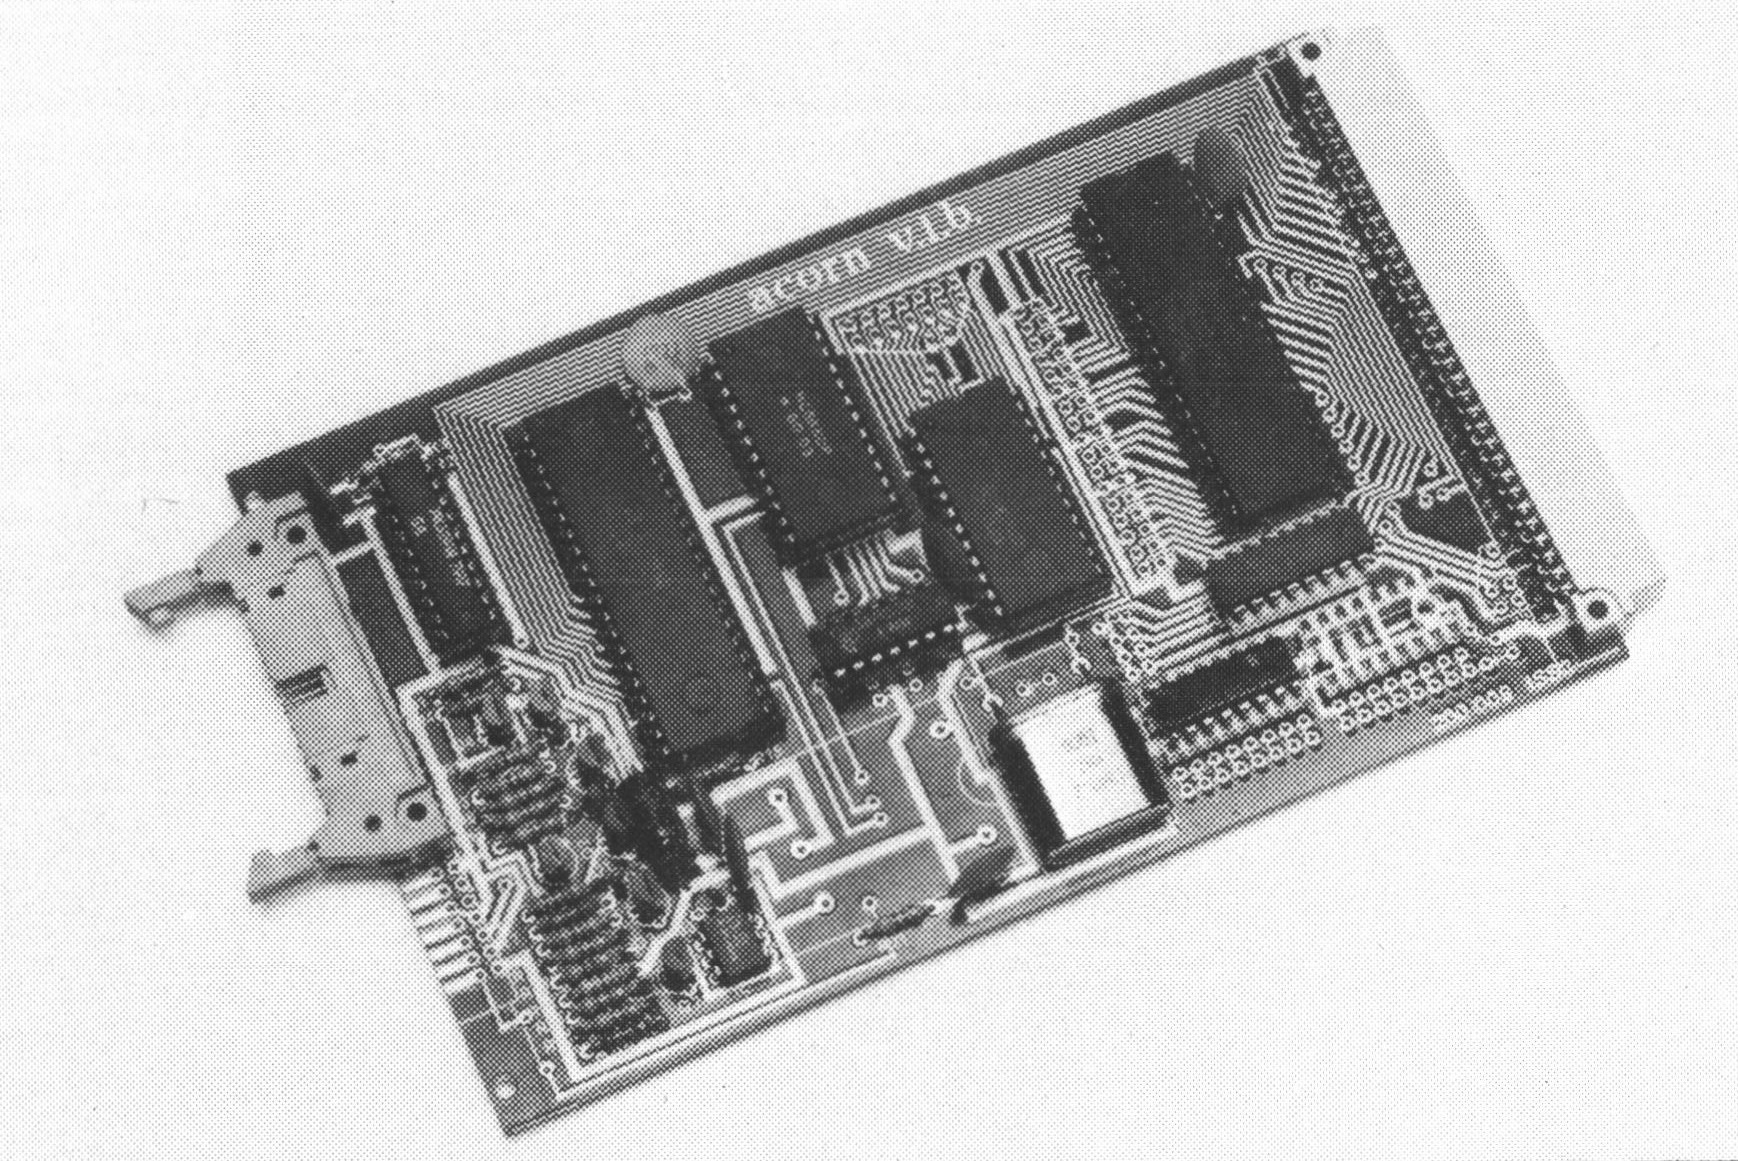 Acorn System Versatile Interface Board (VIB)